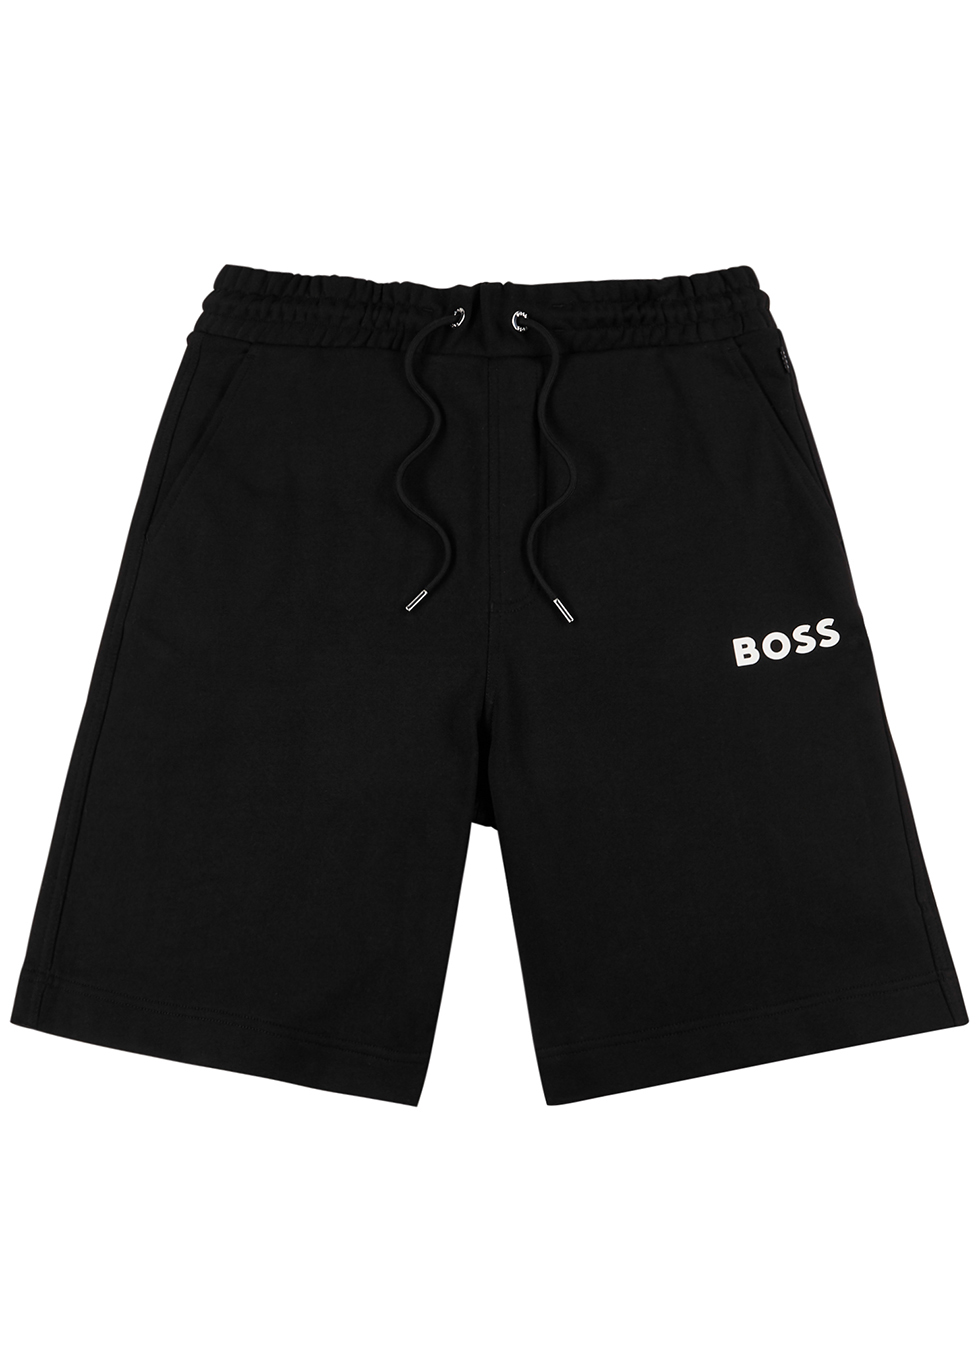 BOSS Lamson black logo cotton shorts - Harvey Nichols